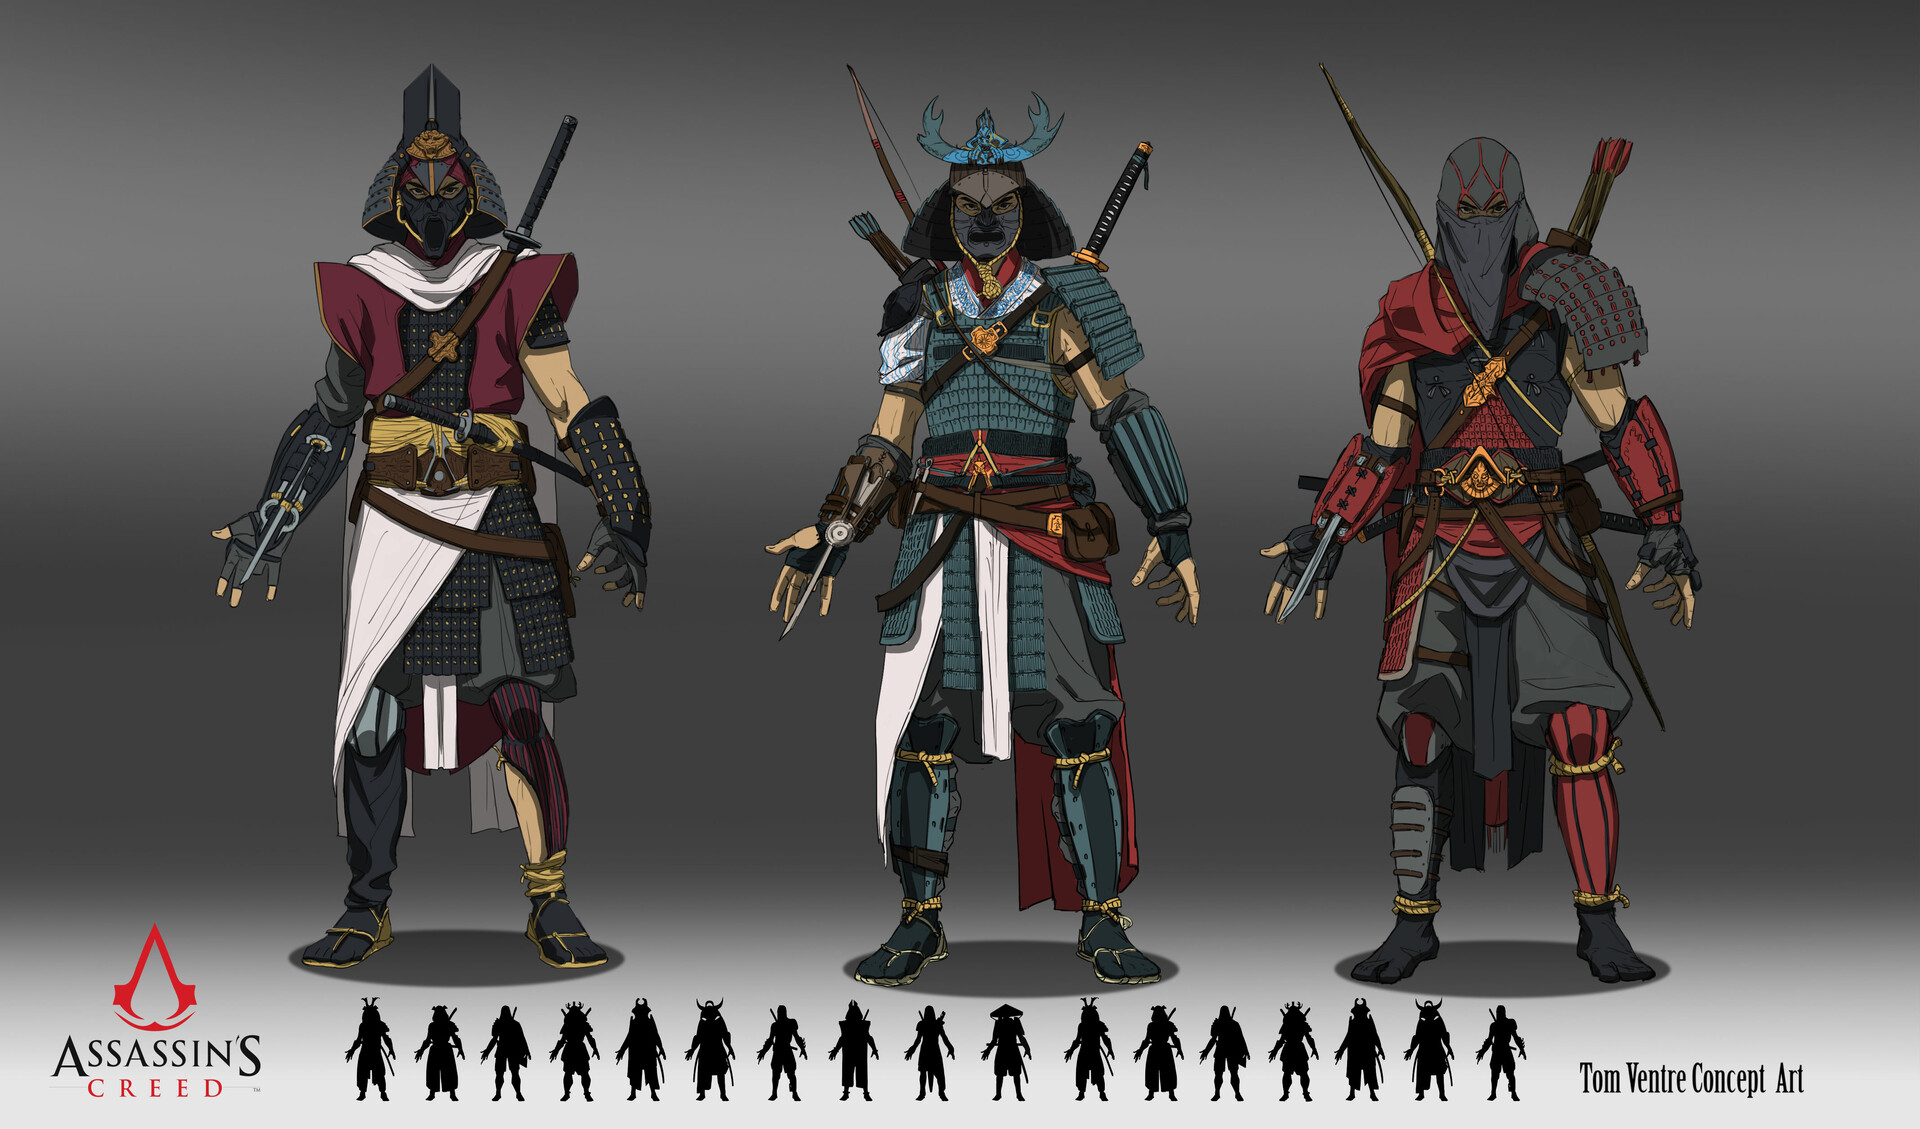 Assassin's Creed: JAPAN - Concept Art : r/assassinscreed